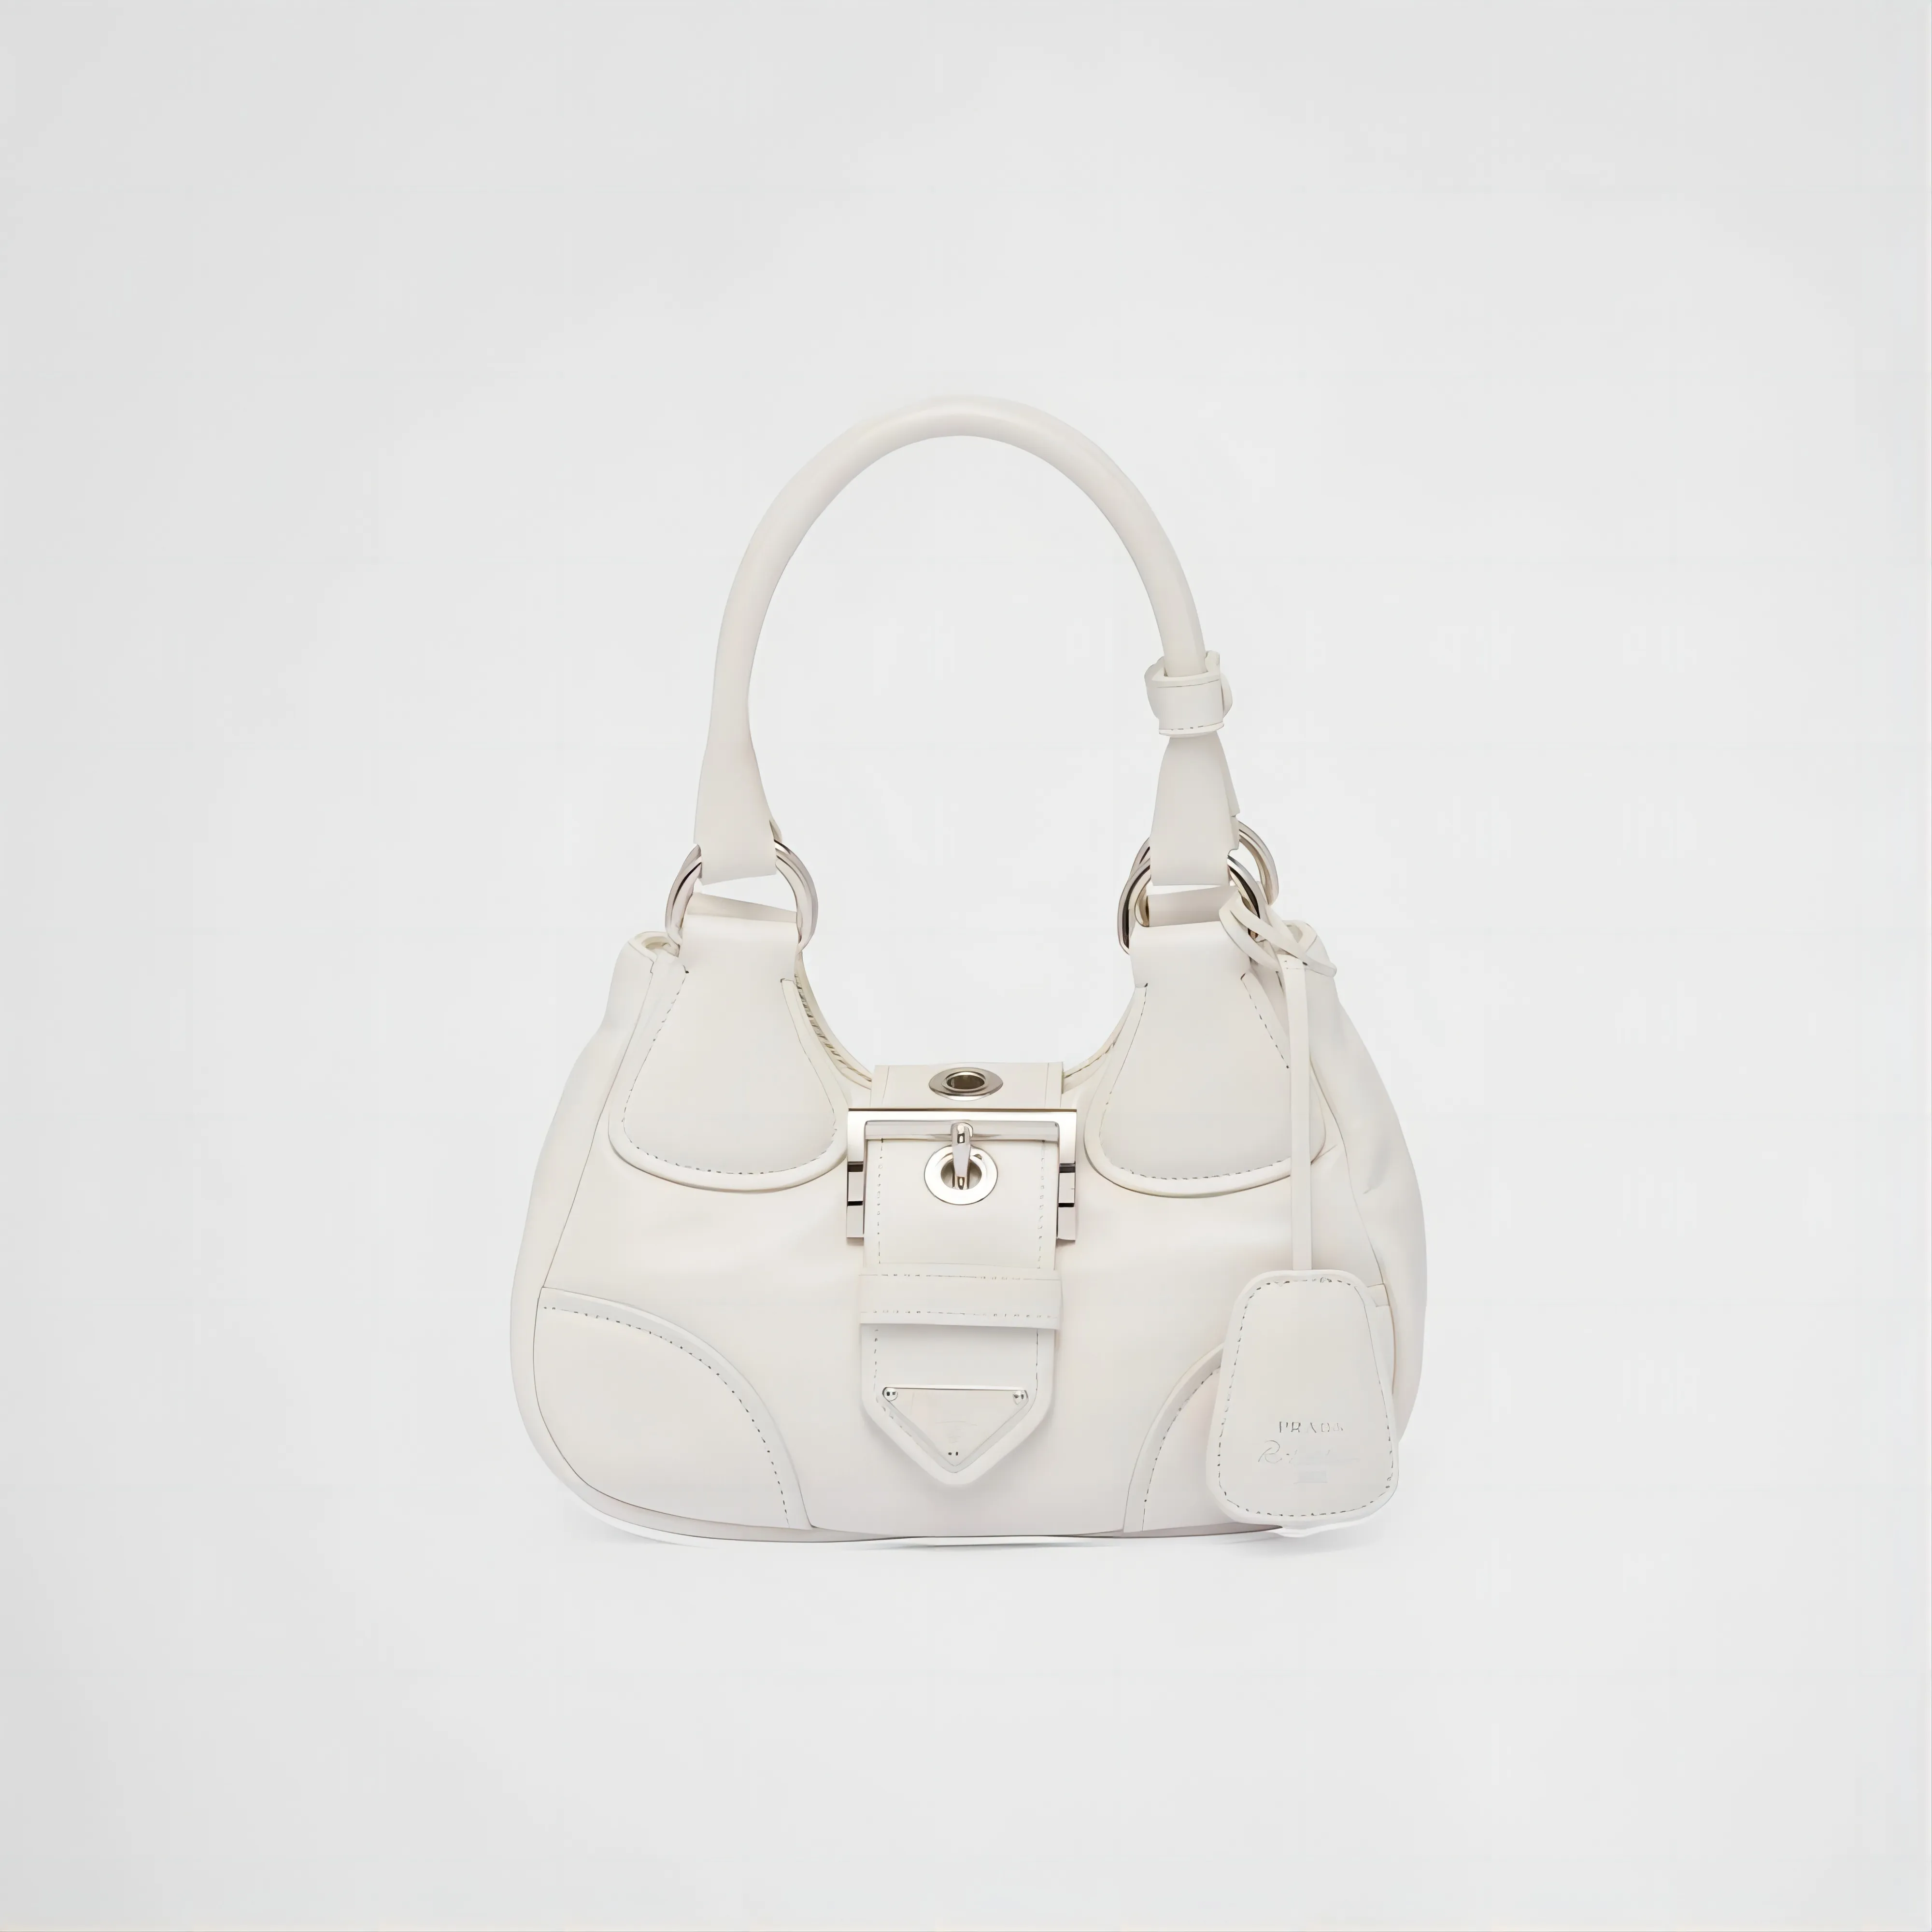 Designer New Fashion Shoulder Bag Luxury Top Real Leather High Quality Handle Handbag For Women Famous Brand Handbag